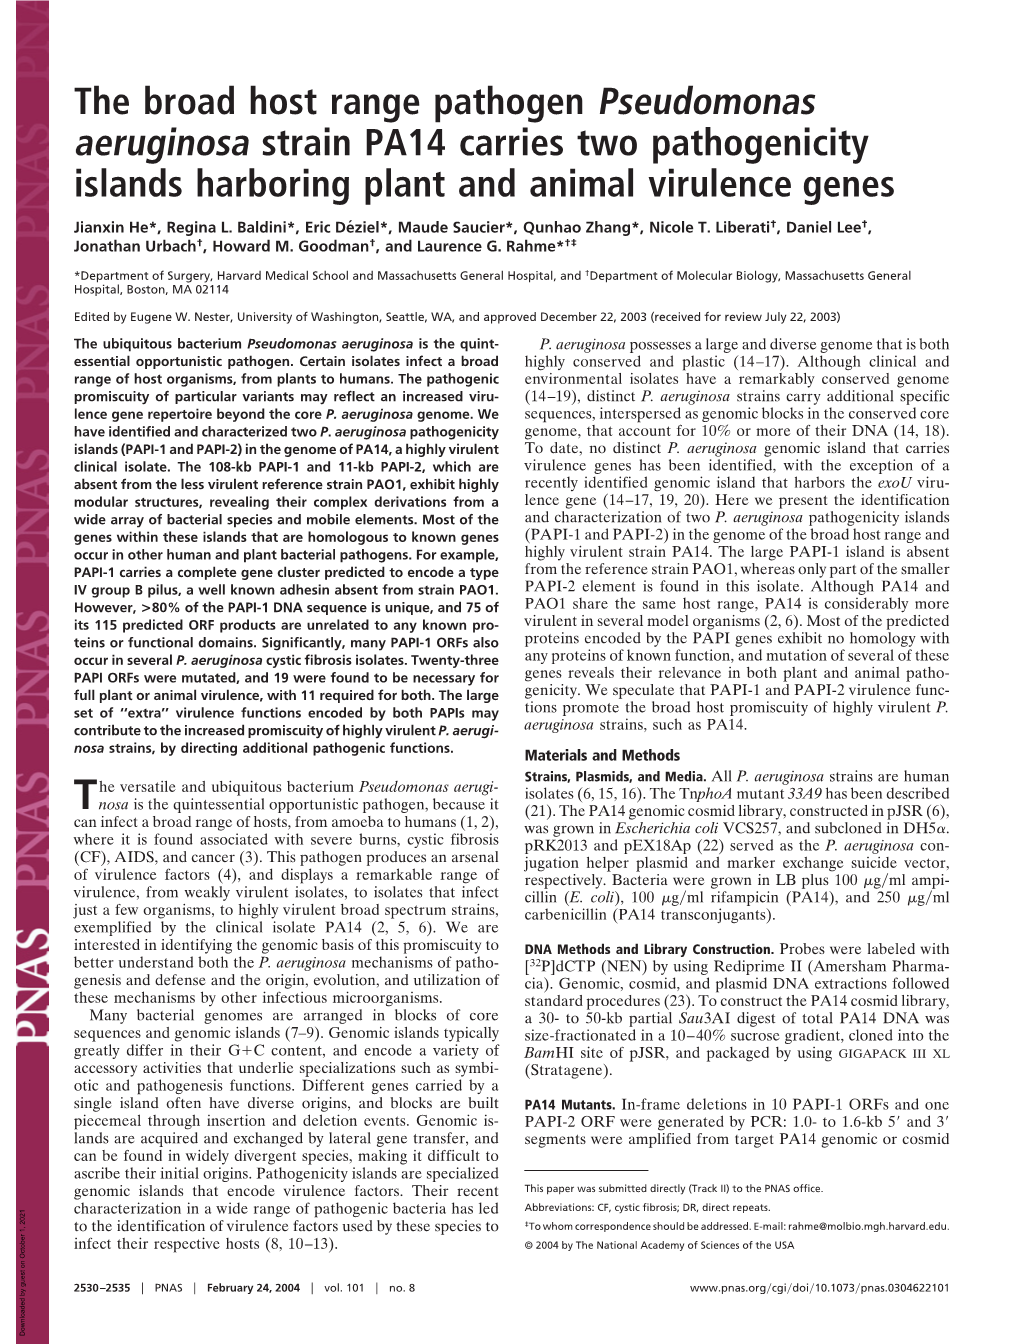 The Broad Host Range Pathogen Pseudomonas Aeruginosa Strain PA14 Carries Two Pathogenicity Islands Harboring Plant and Animal Virulence Genes